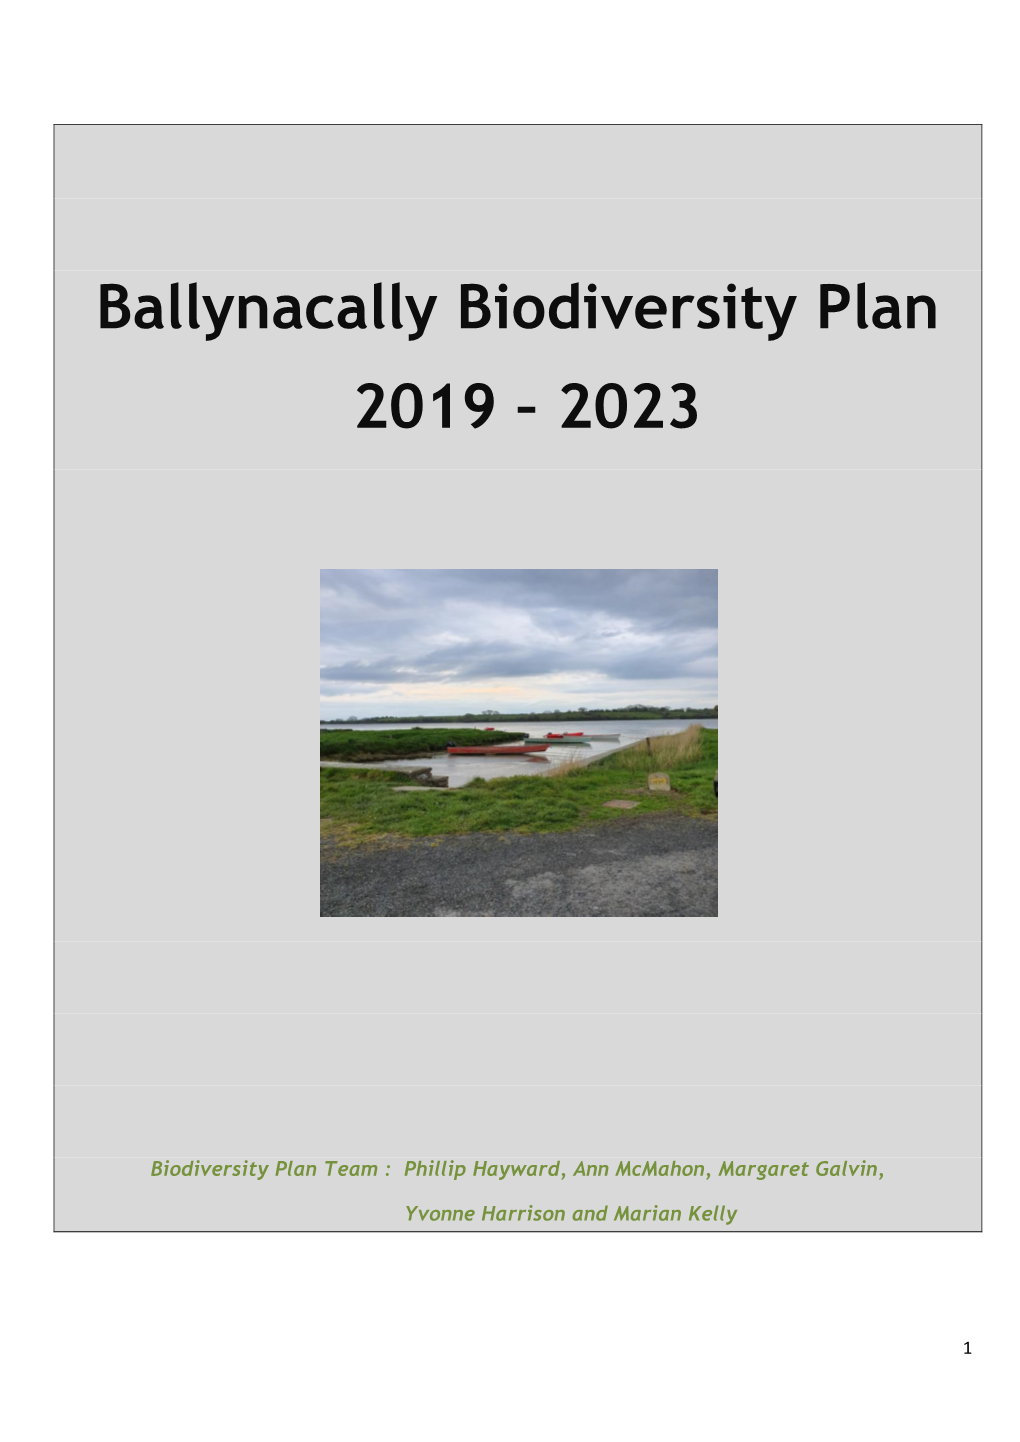 Ballynacally Biodiversity Plan 2019 – 2023